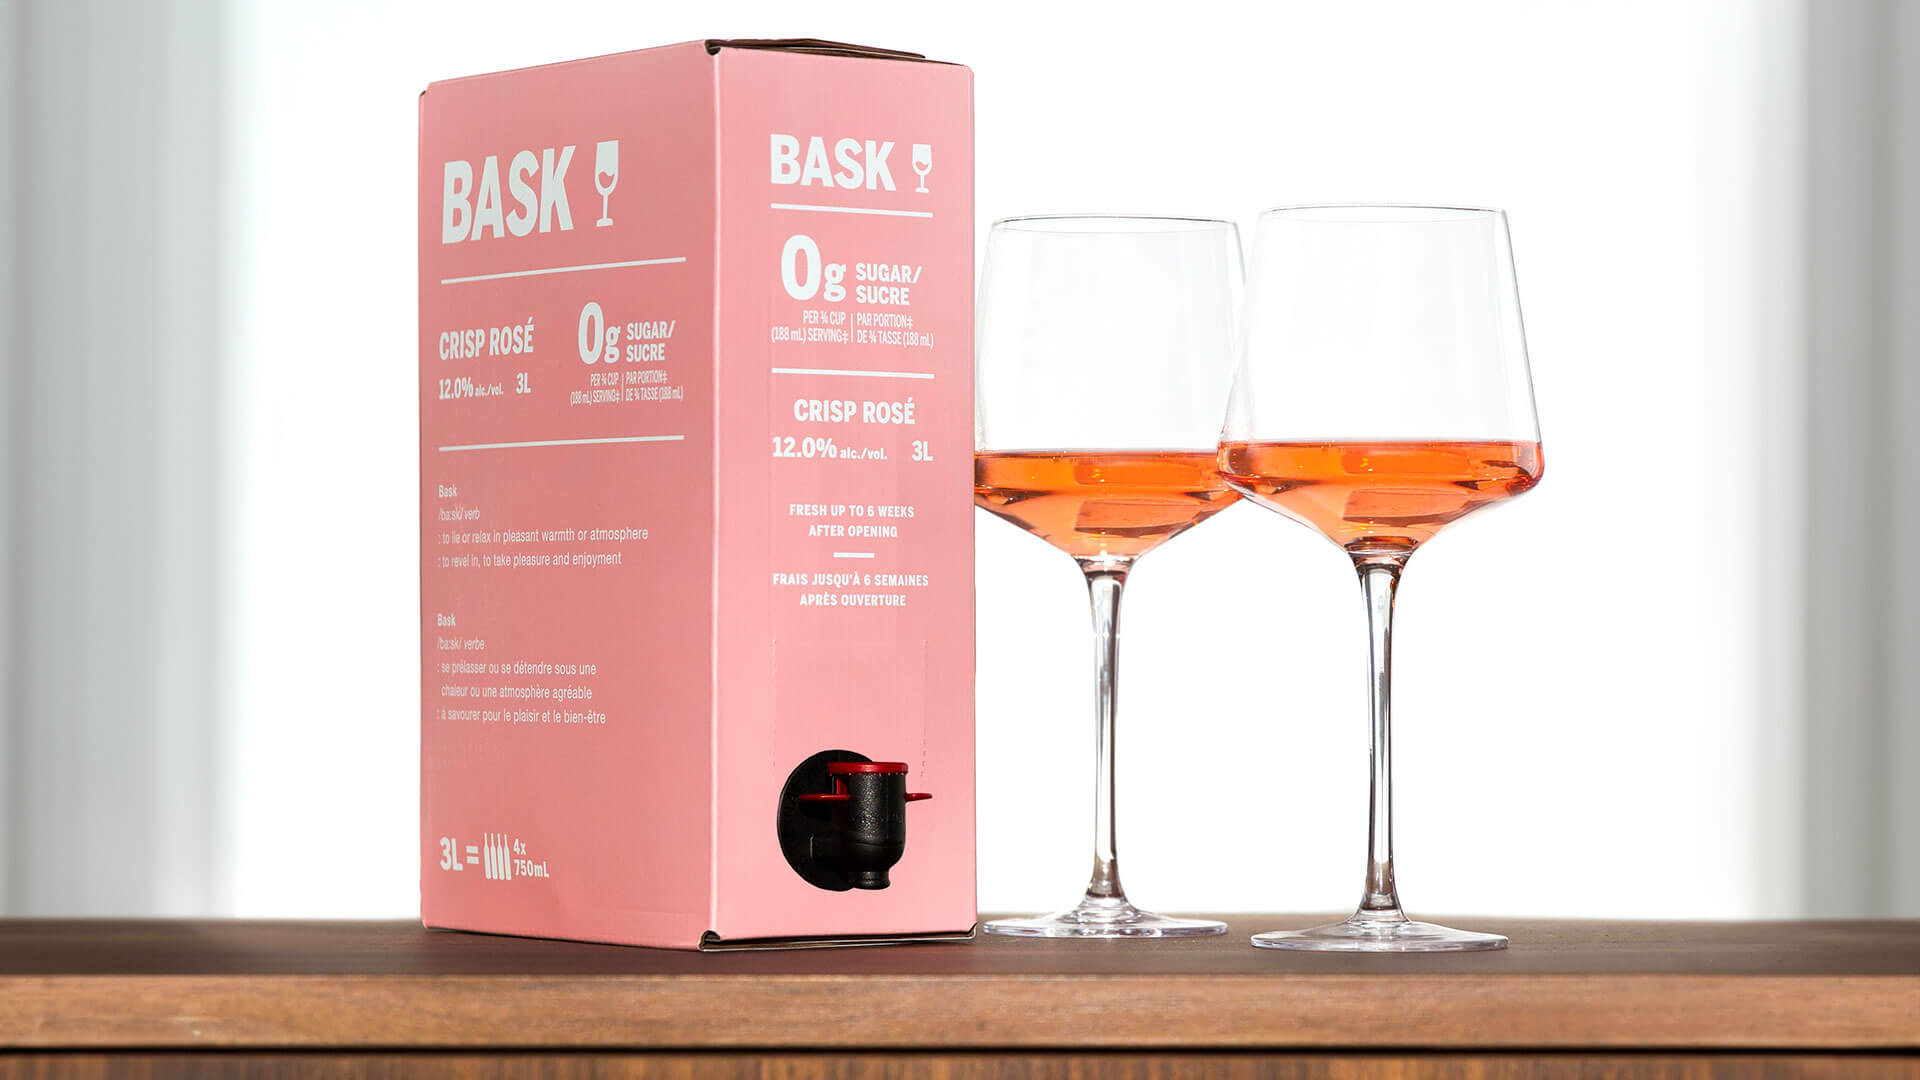 Bask Crisp 3L Rosé and 2 glasses of rosé.